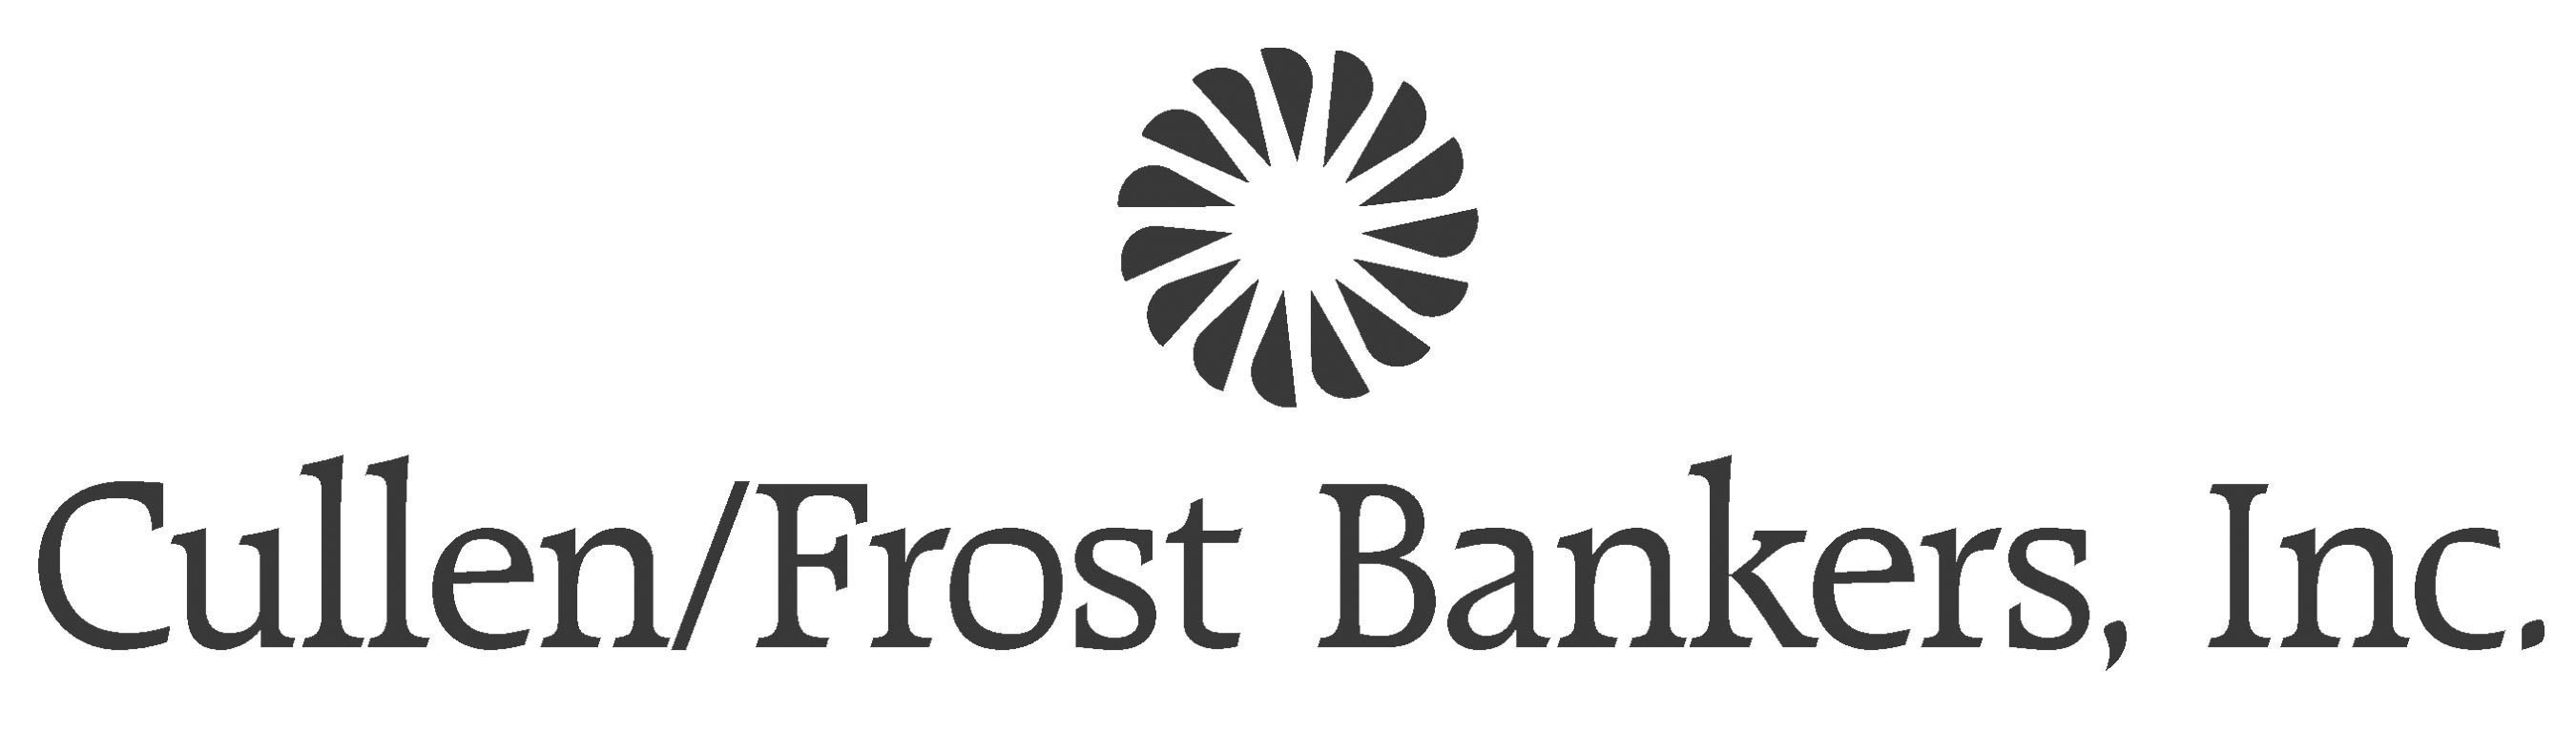 Cullen/Frost Bankers logo. (PRNewsFoto/Cullen/Frost Bankers) (PRNewsFoto/)